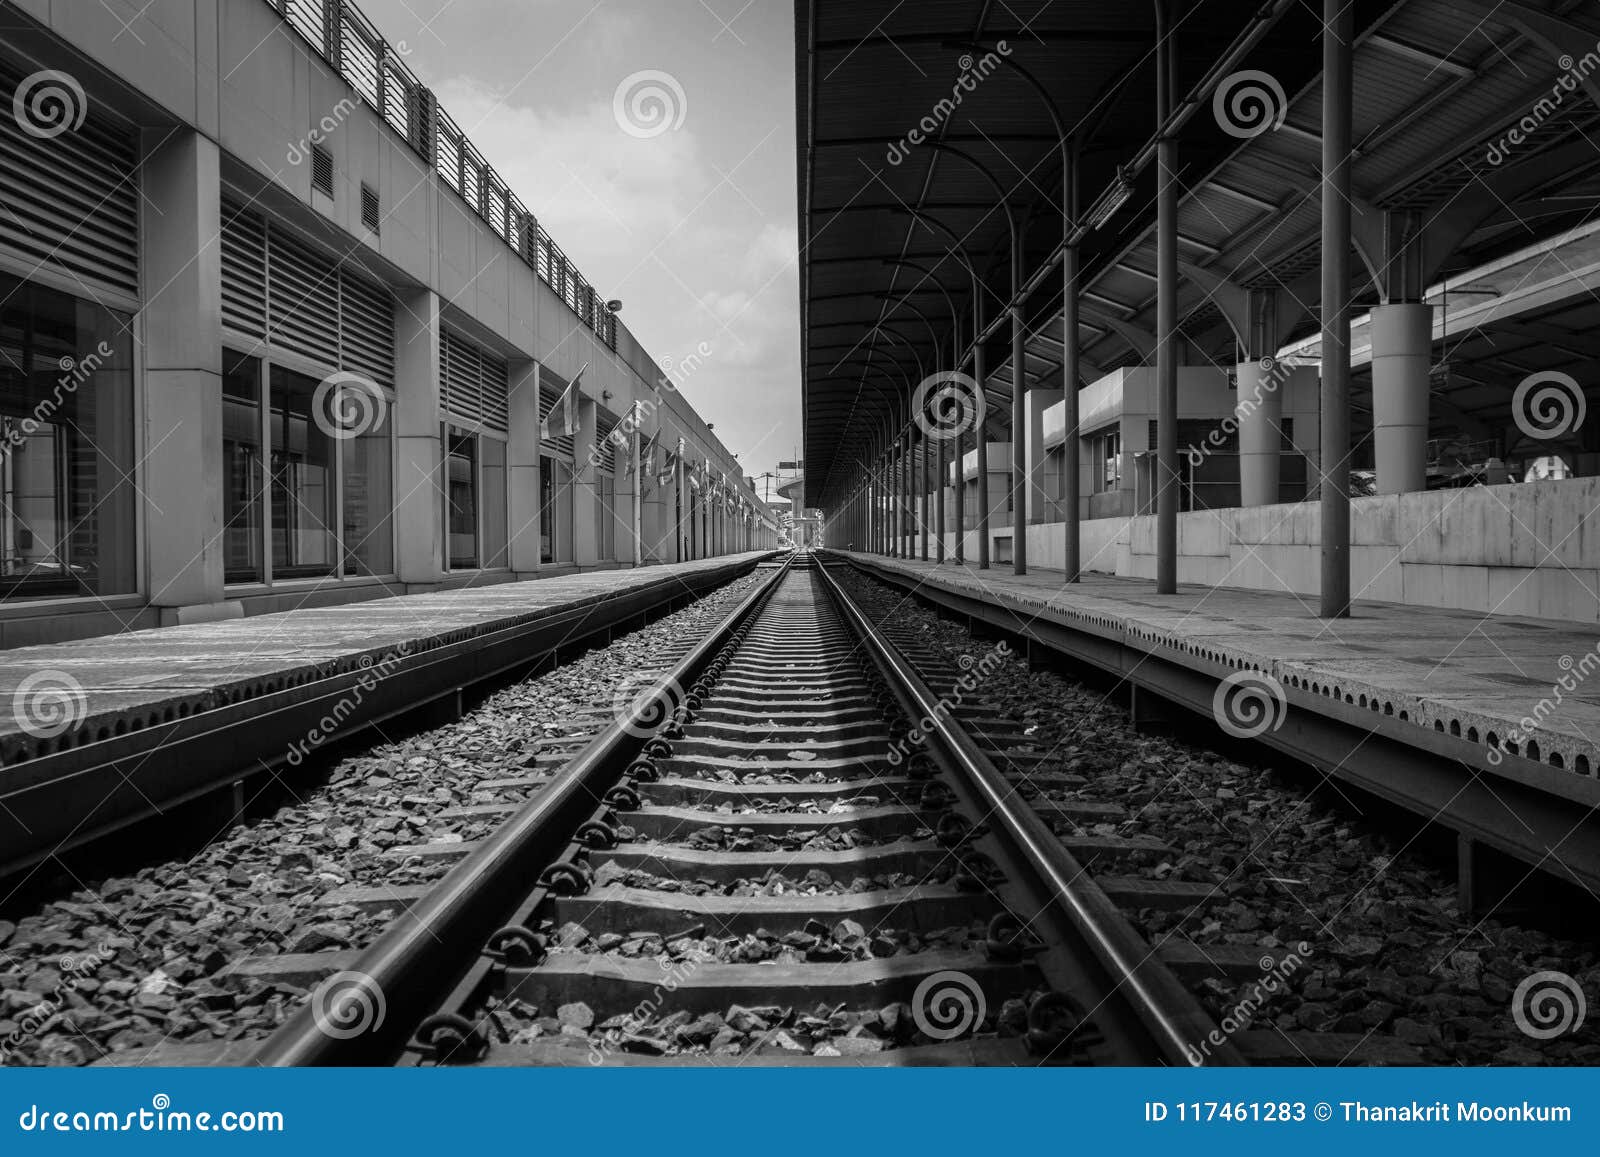 monochrome railroad photos